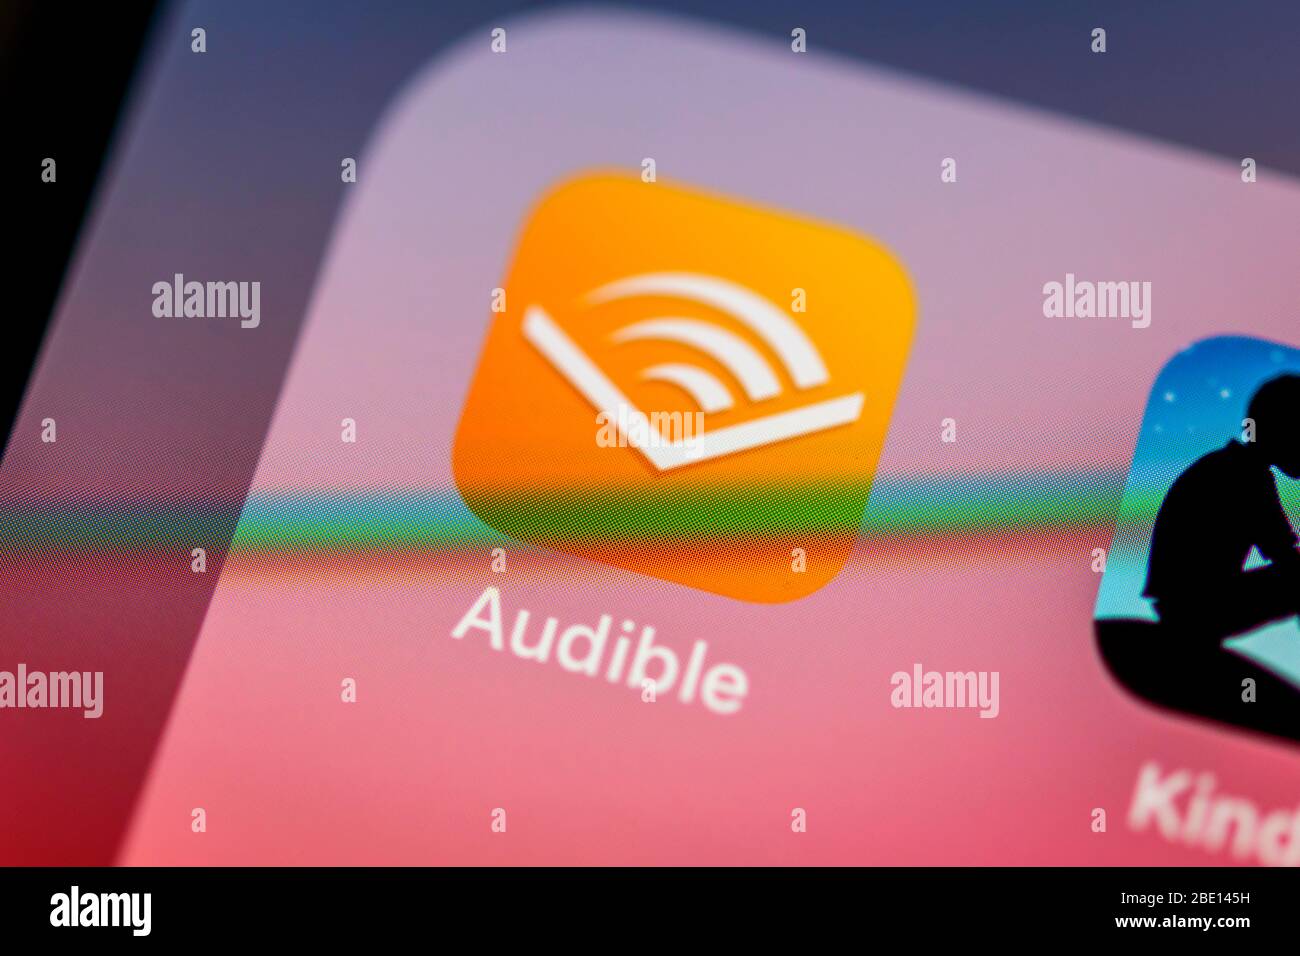 Audible App, audio books, icon, logo, display, iPhone, mobile phone, smartphone, iOS, macro recording, detail, full format Stock Photo